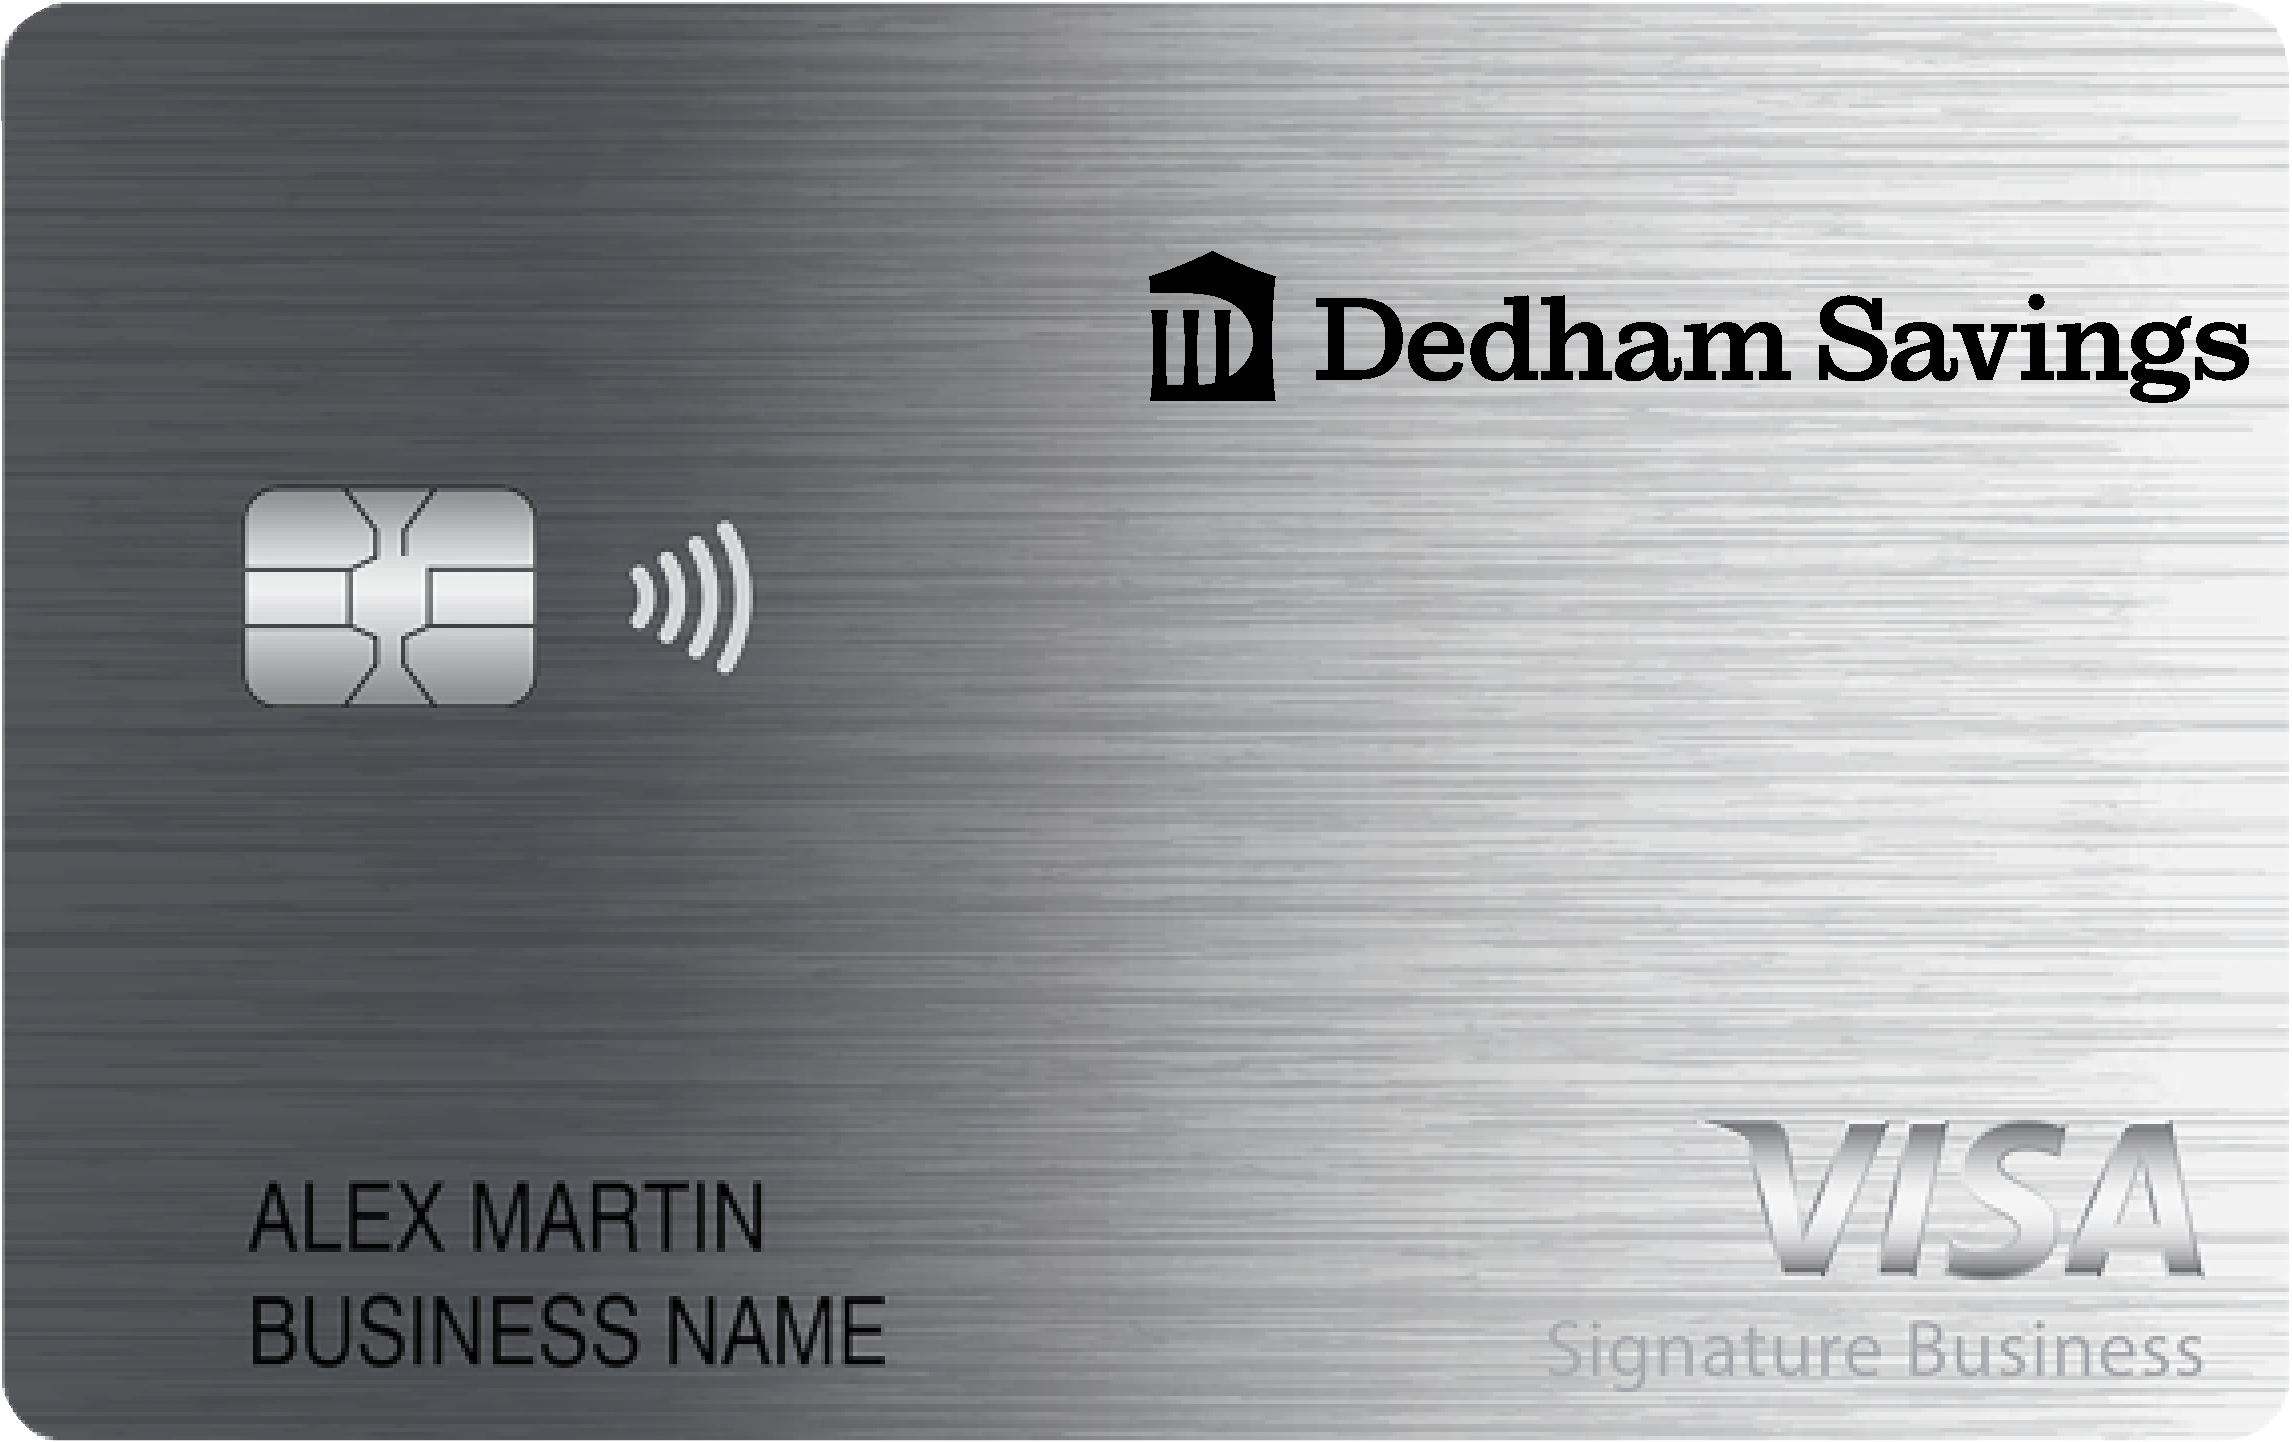 Dedham Savings Smart Business Rewards Card